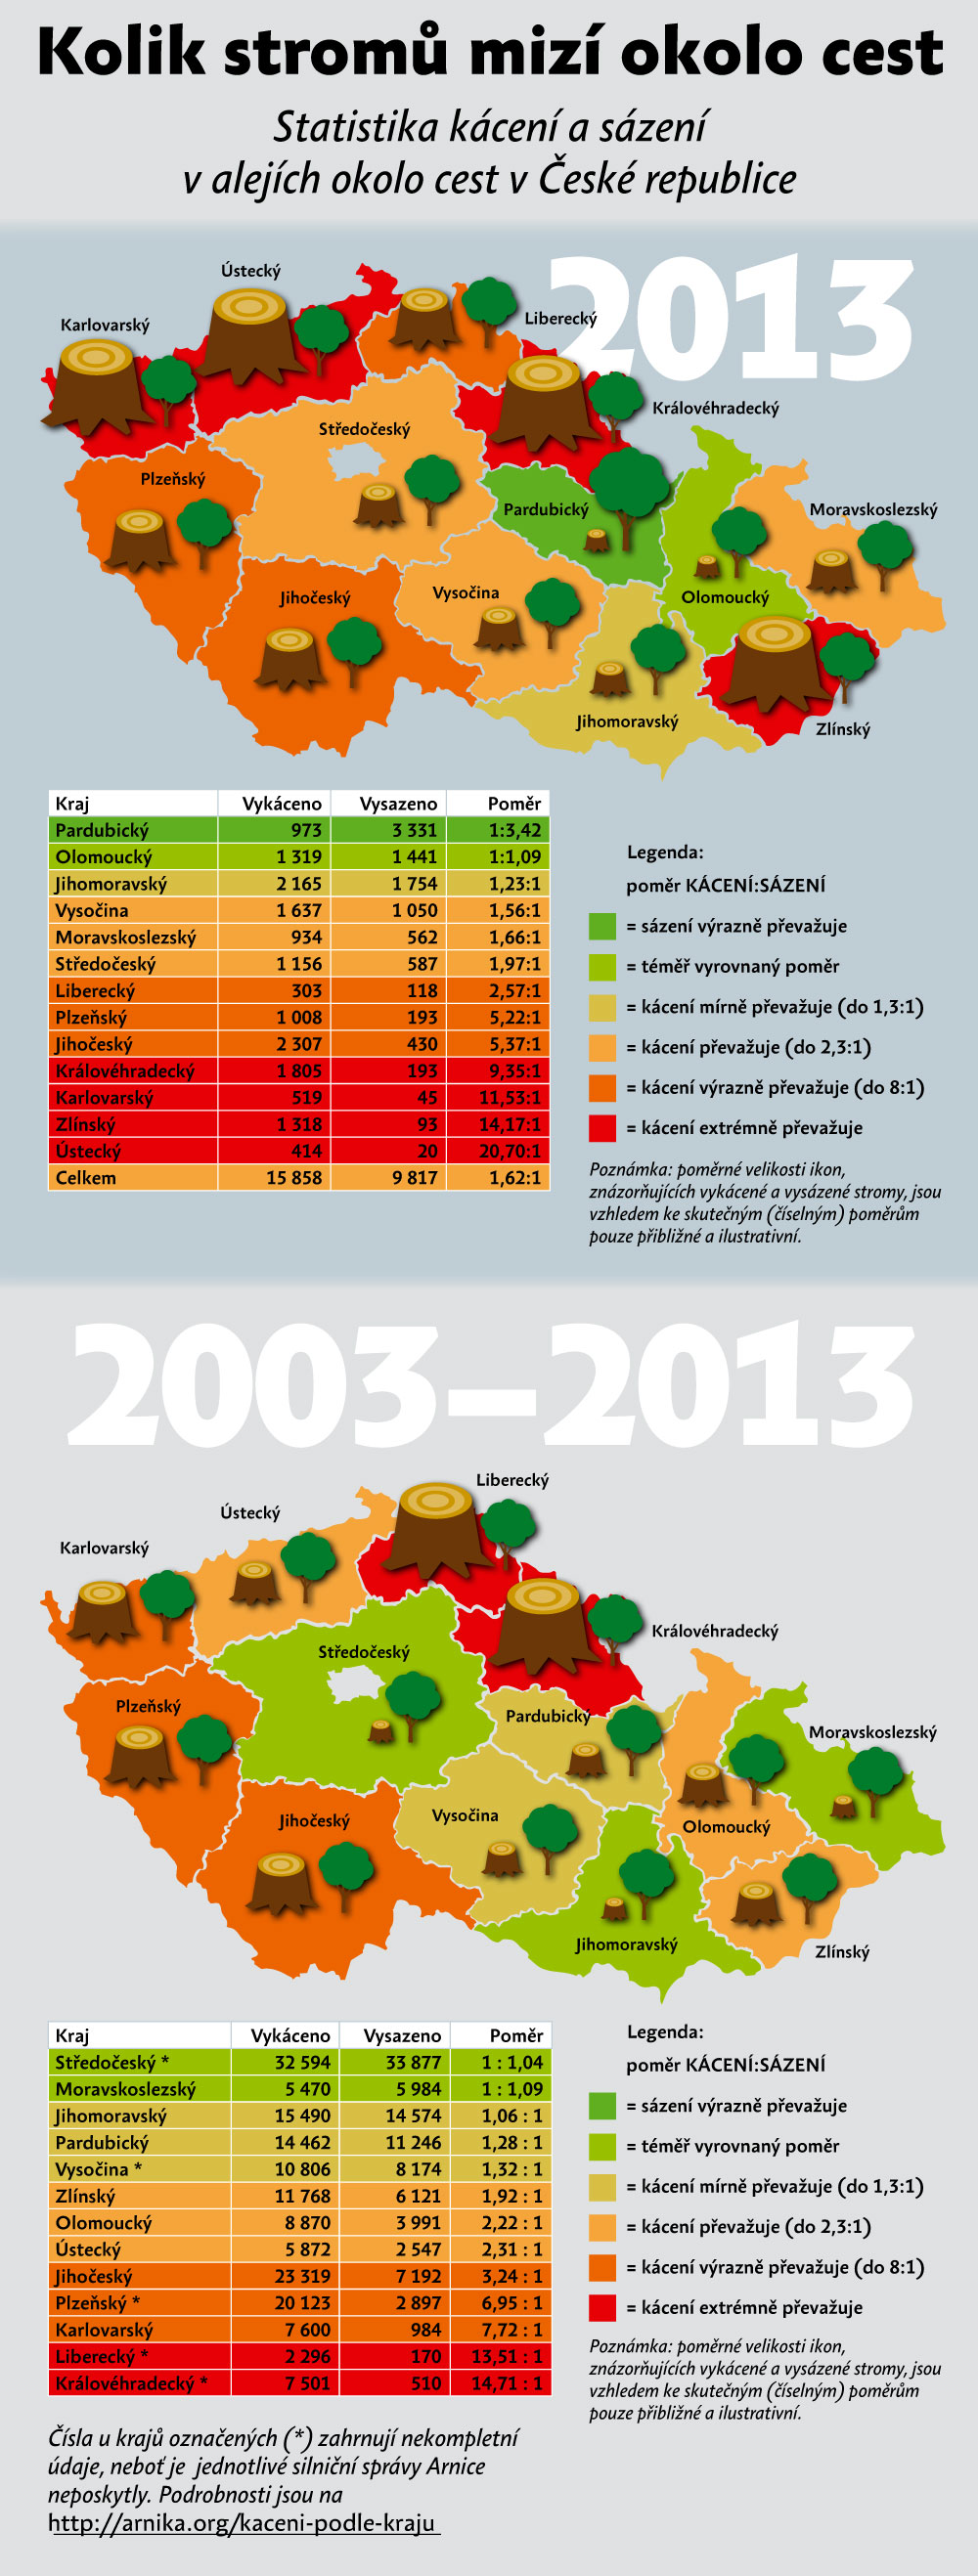 Statistiky kaceni 2013 Infografika